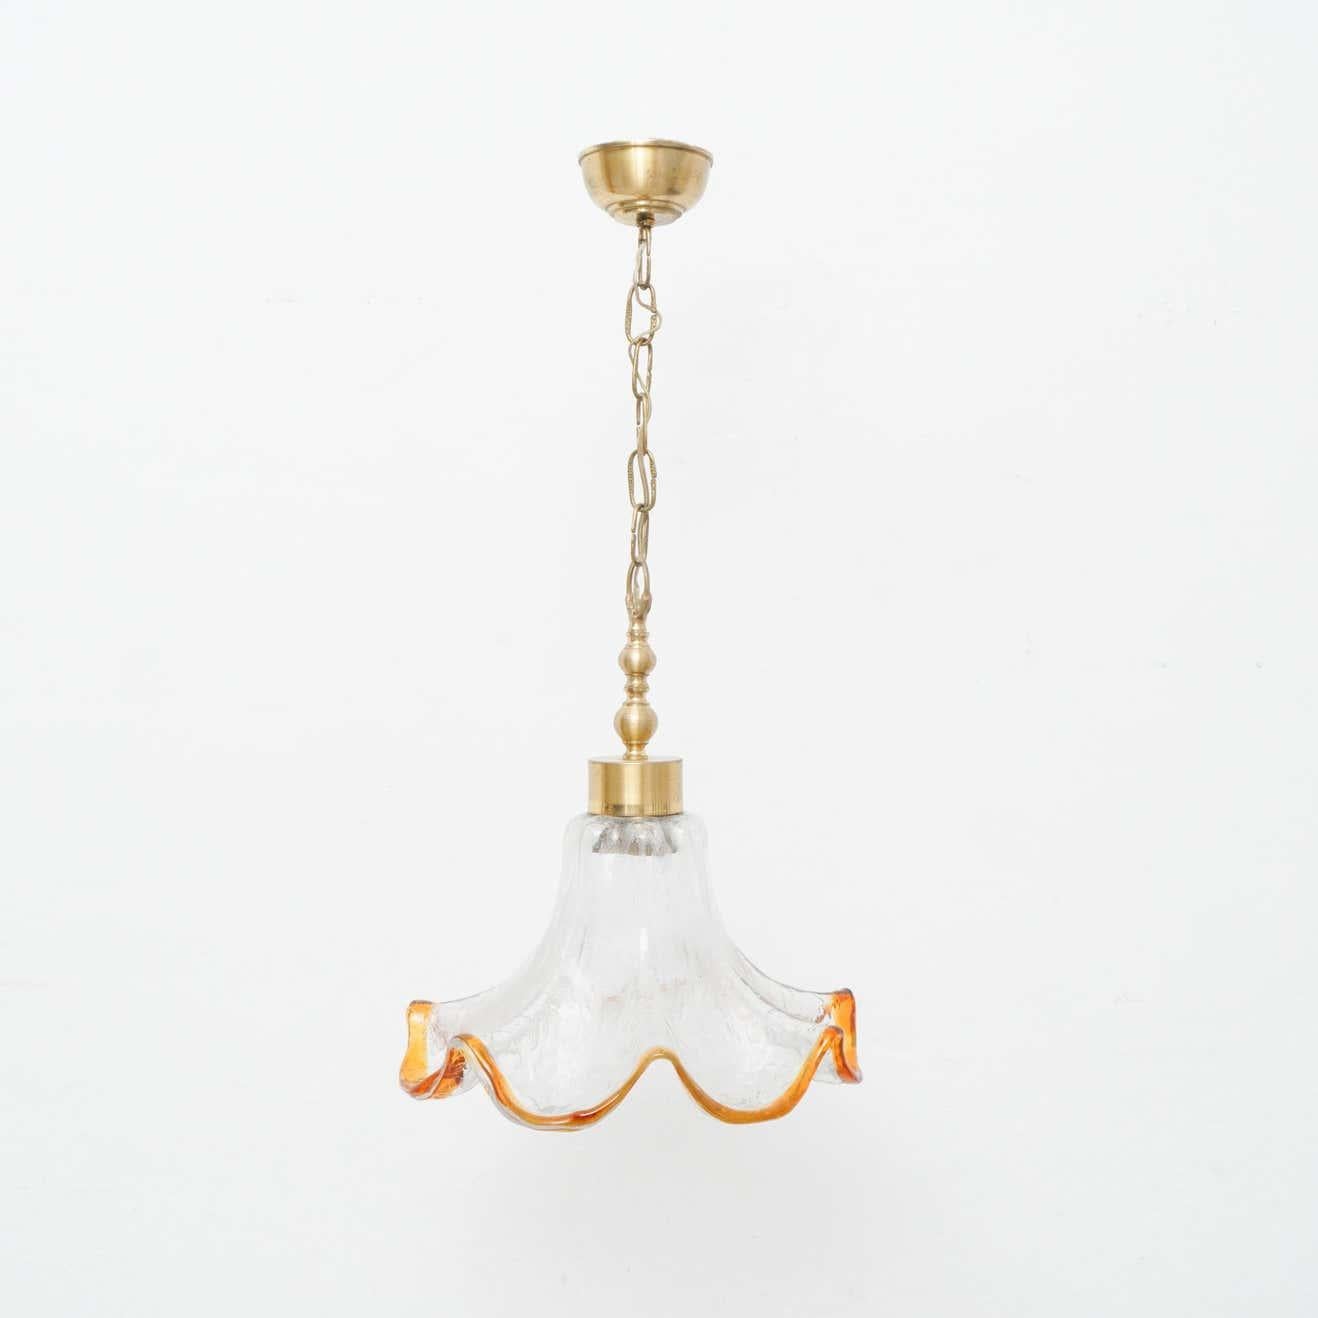 Spanish Mid-Century Modern Glass Pendant Lamp, circa 1960 For Sale